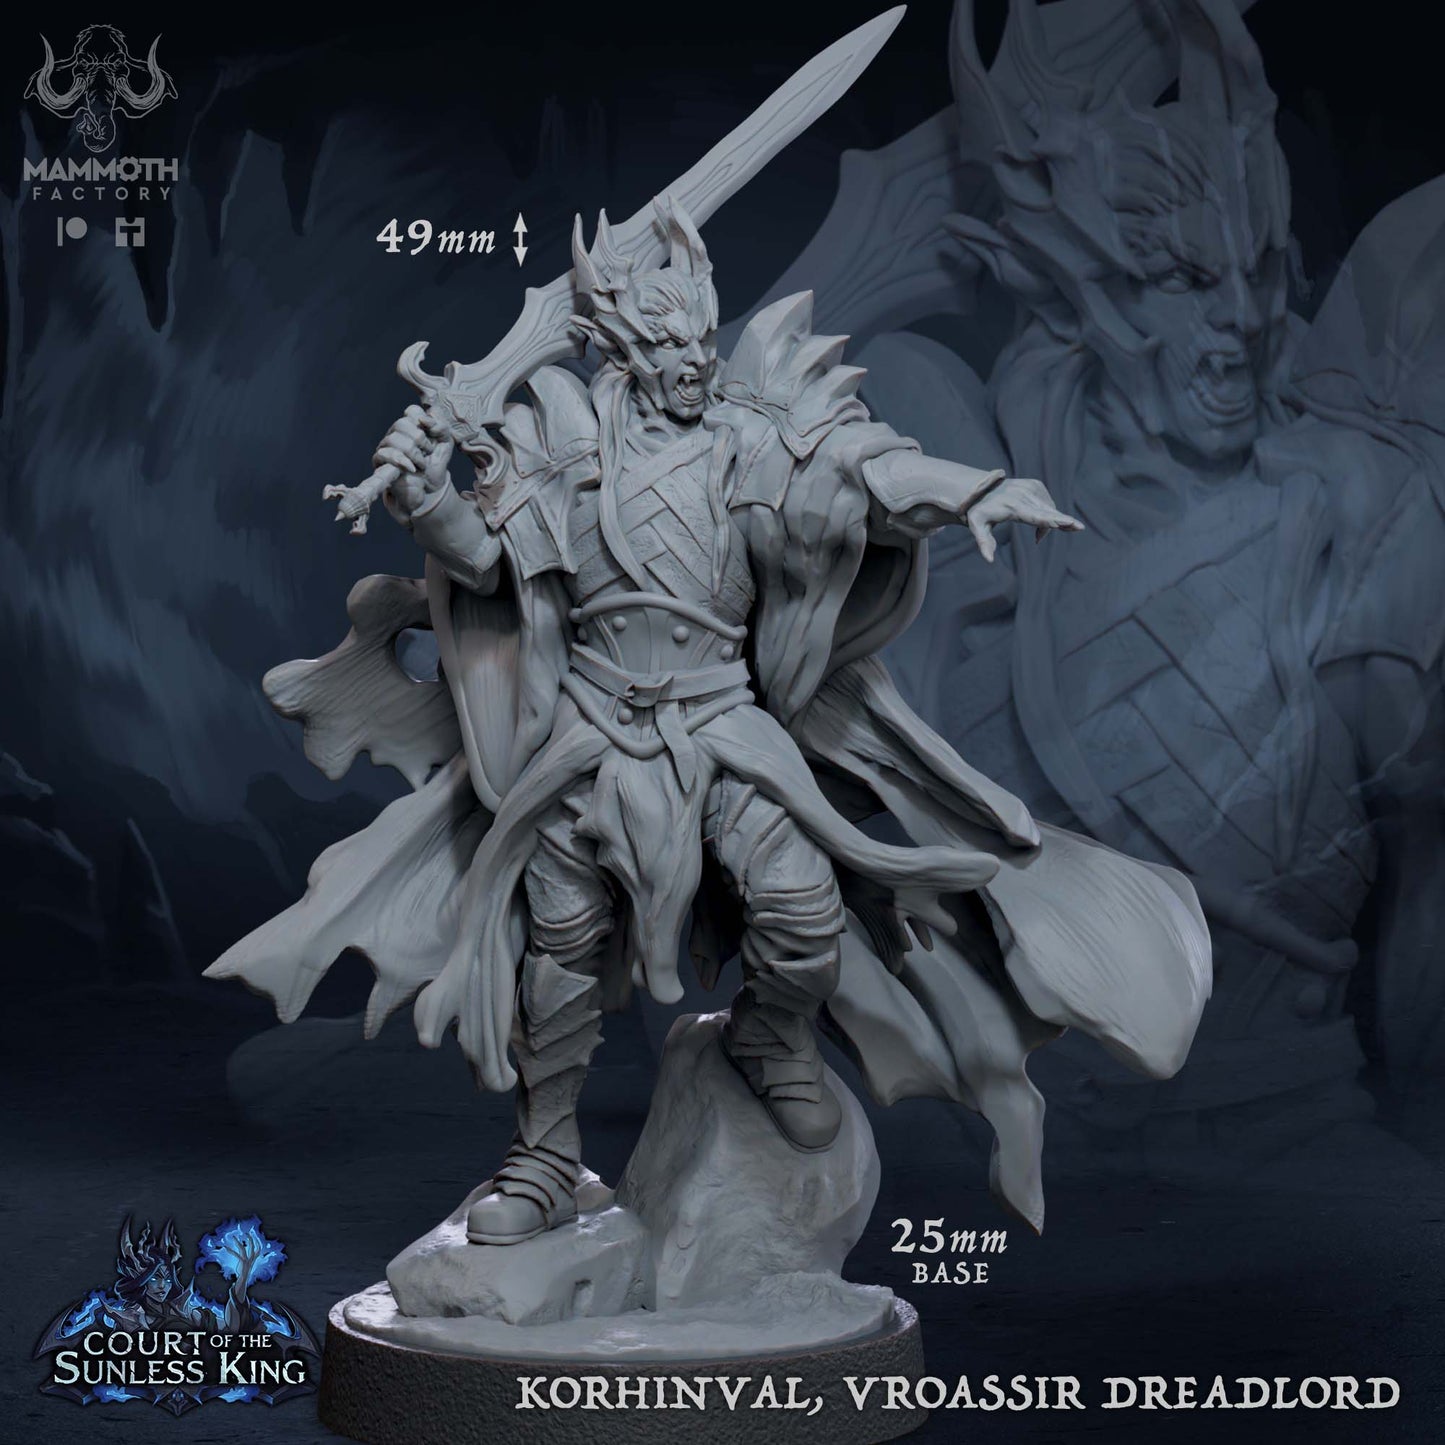 Elf Vampirlord Miniatur | Korhinval, Vroassir Dreadlord | Dnd | Pathfinder | Mammoth Factory